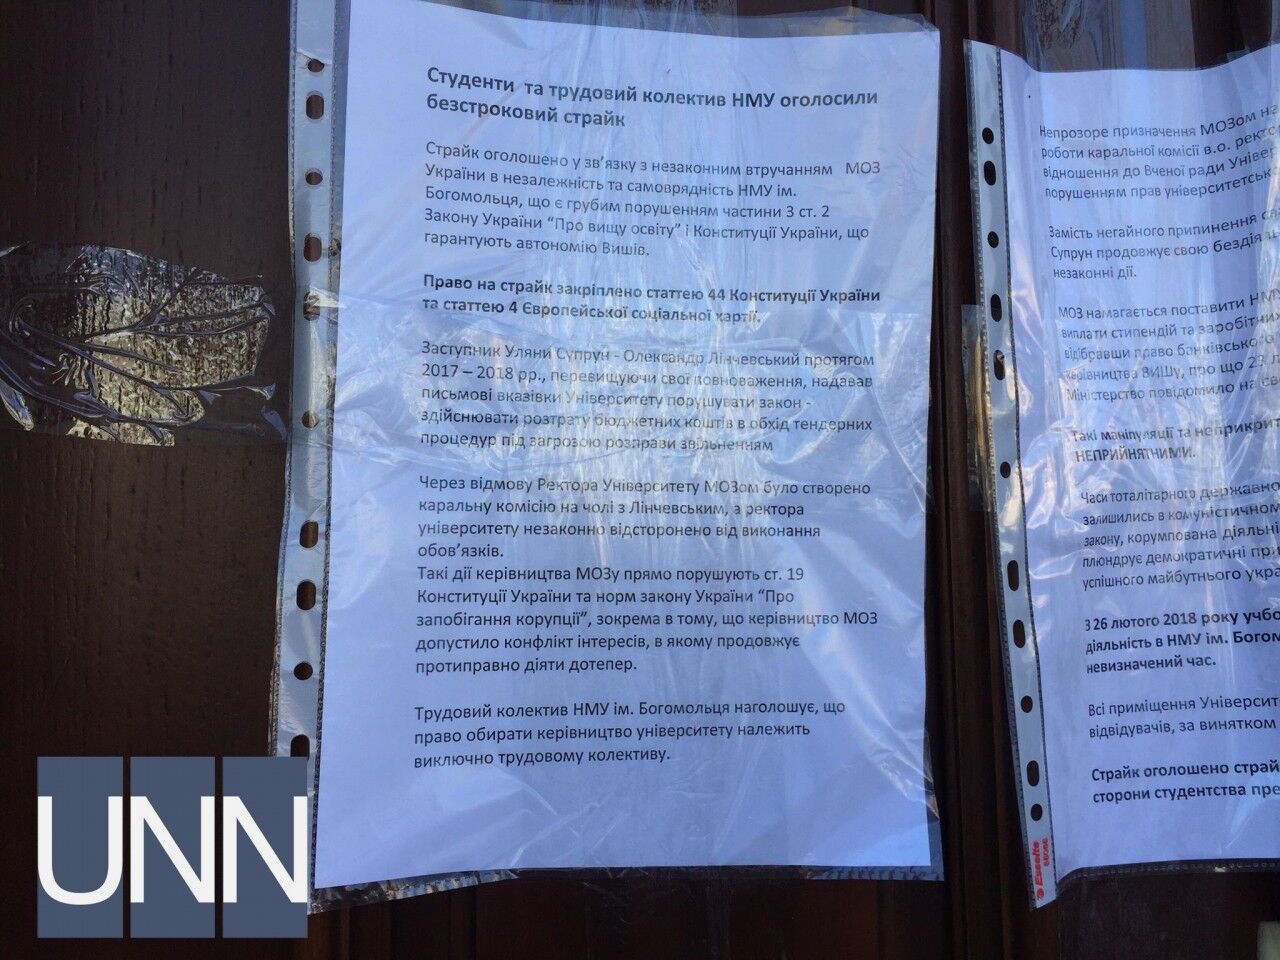 Цепь на ректорате: появились фото из бастующего вуза Киева